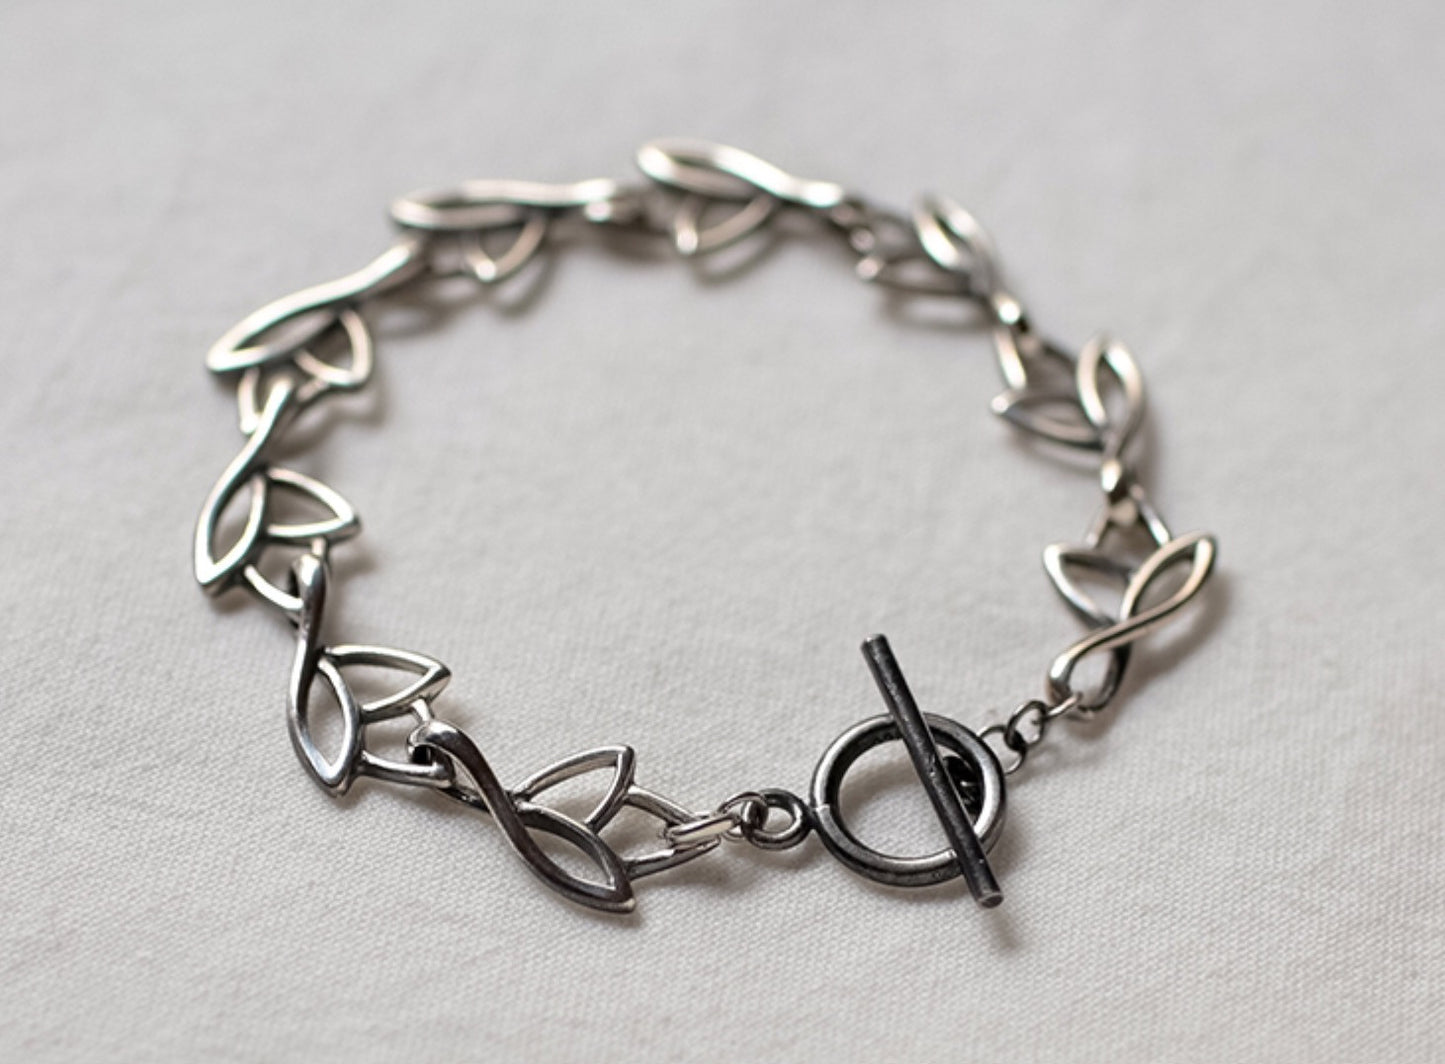 925 sterling silver dainty Leaves linked chain bracelet